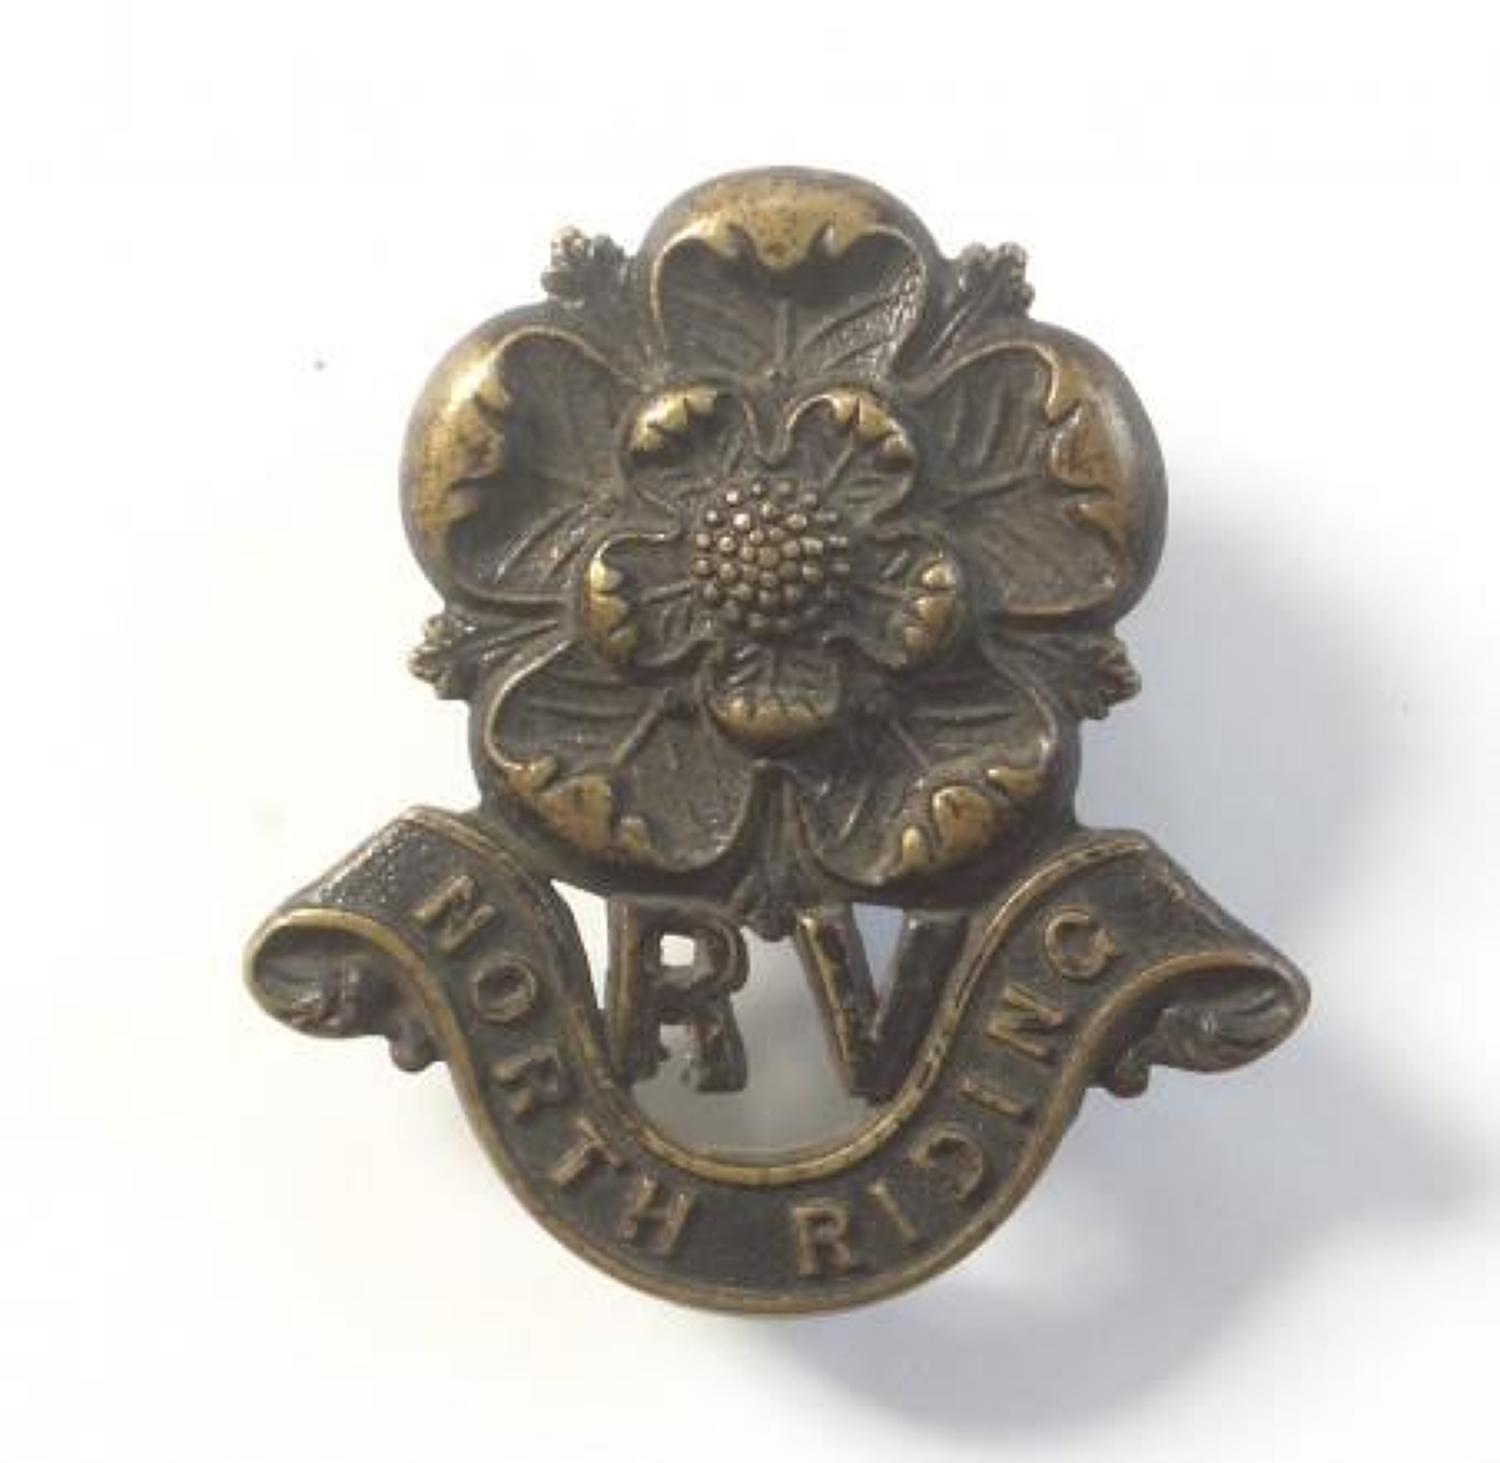 North Riding Rifle Volunteers WW1 Yorkshire VTC cap badge